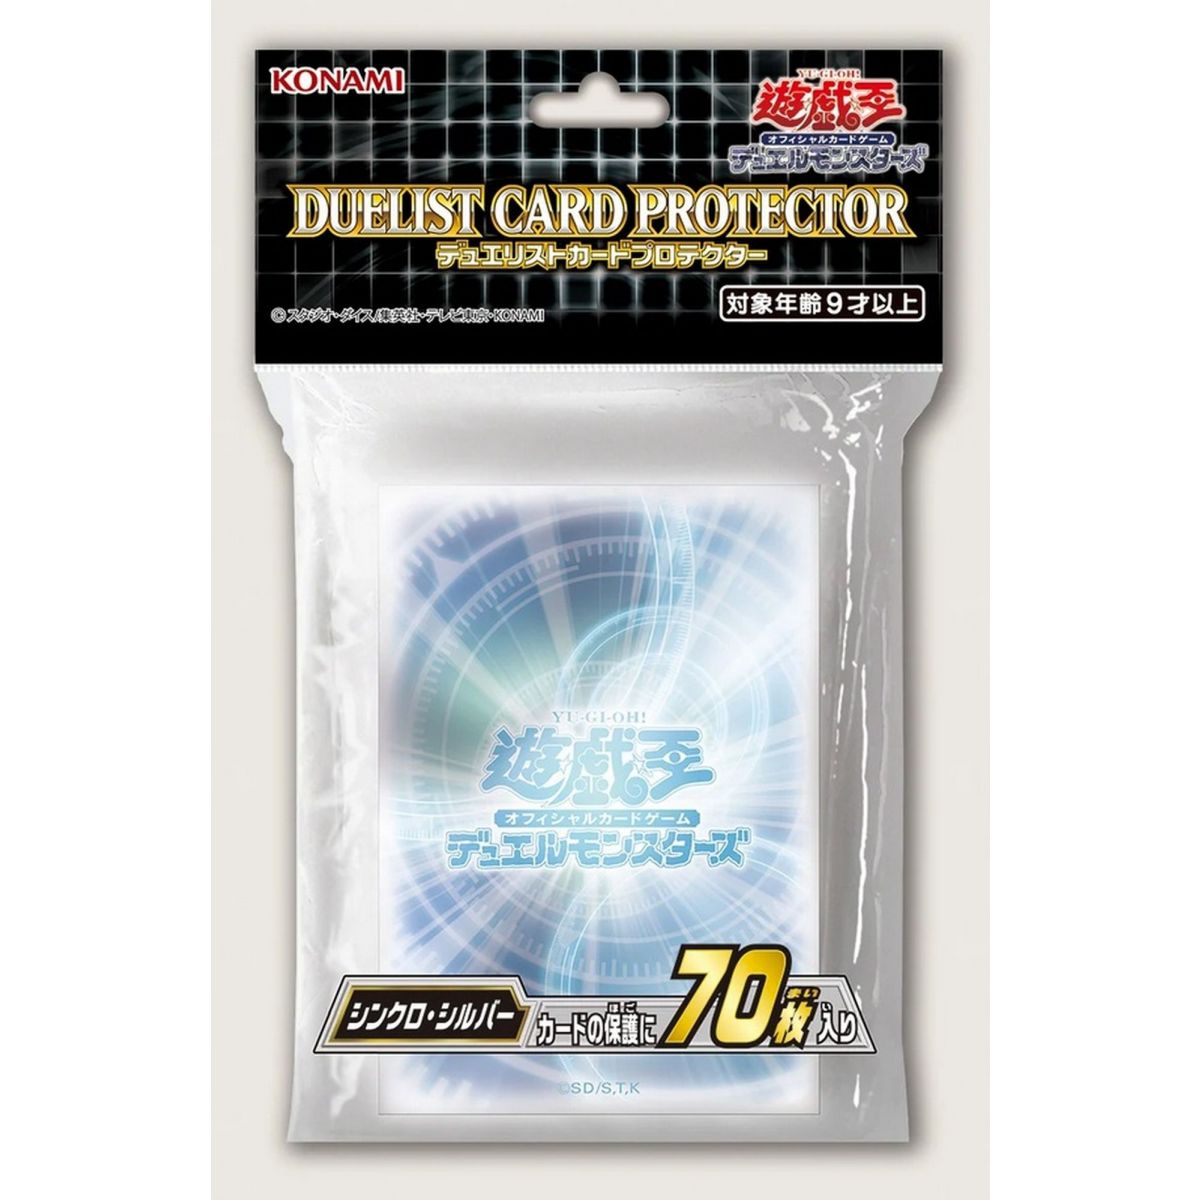 Item Yu Gi Oh! - Card Protectors - Konami Silver Synchro Duelist Card Protector (70) - OCG